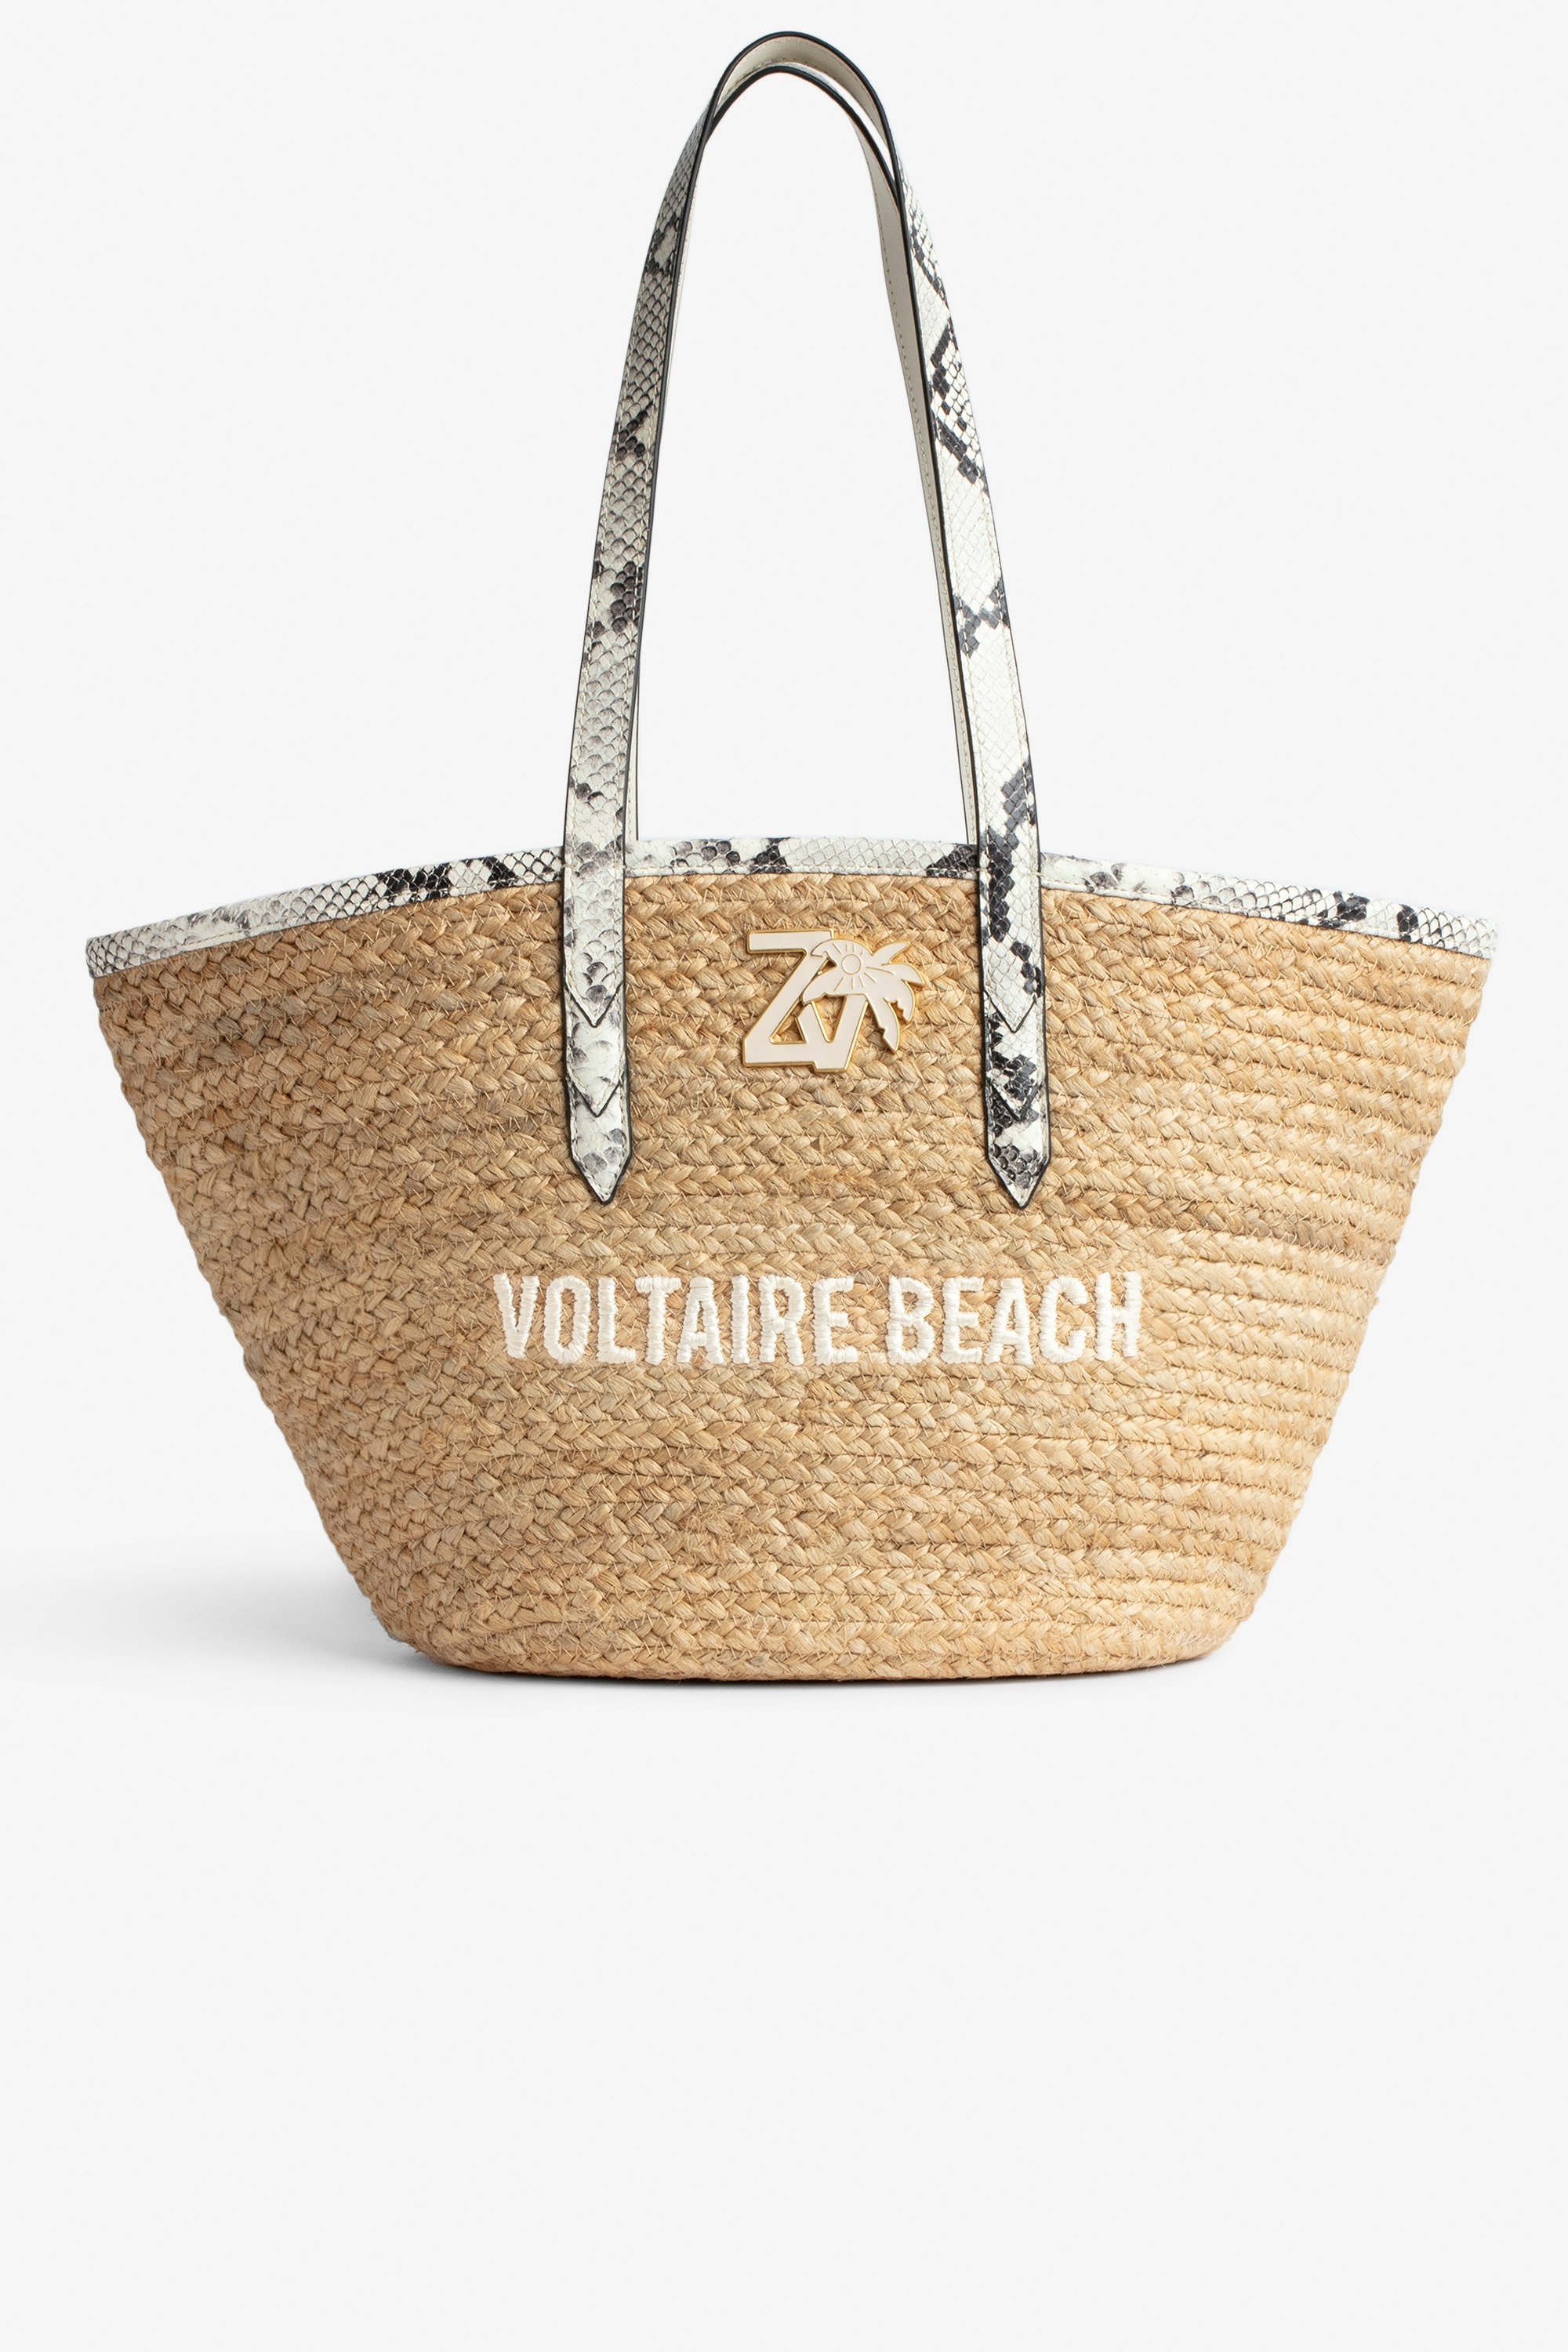 Le Beach Bag パイソンエフェクト エクリュ レザーハンドル ストローバッグ 「Voltaire Beach」の刺繍とチャーム付き ZV レディース